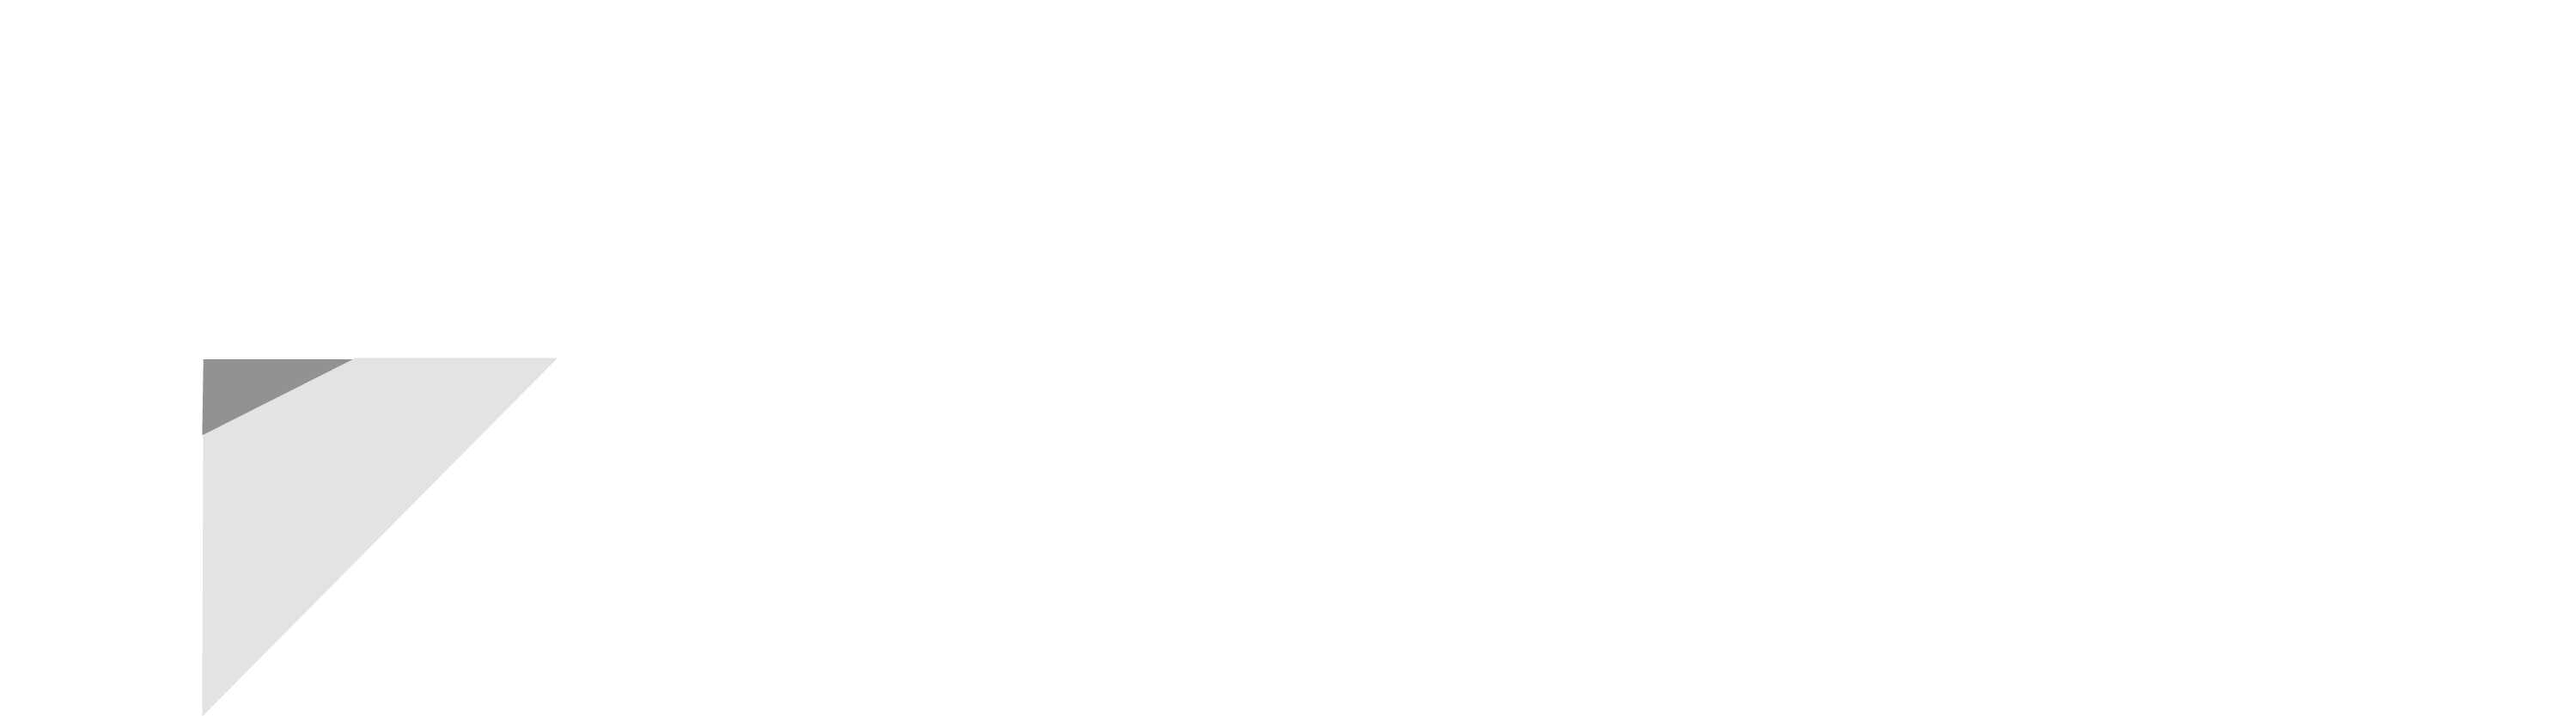 Internet Radio Station Logo - Shoutcast - Home